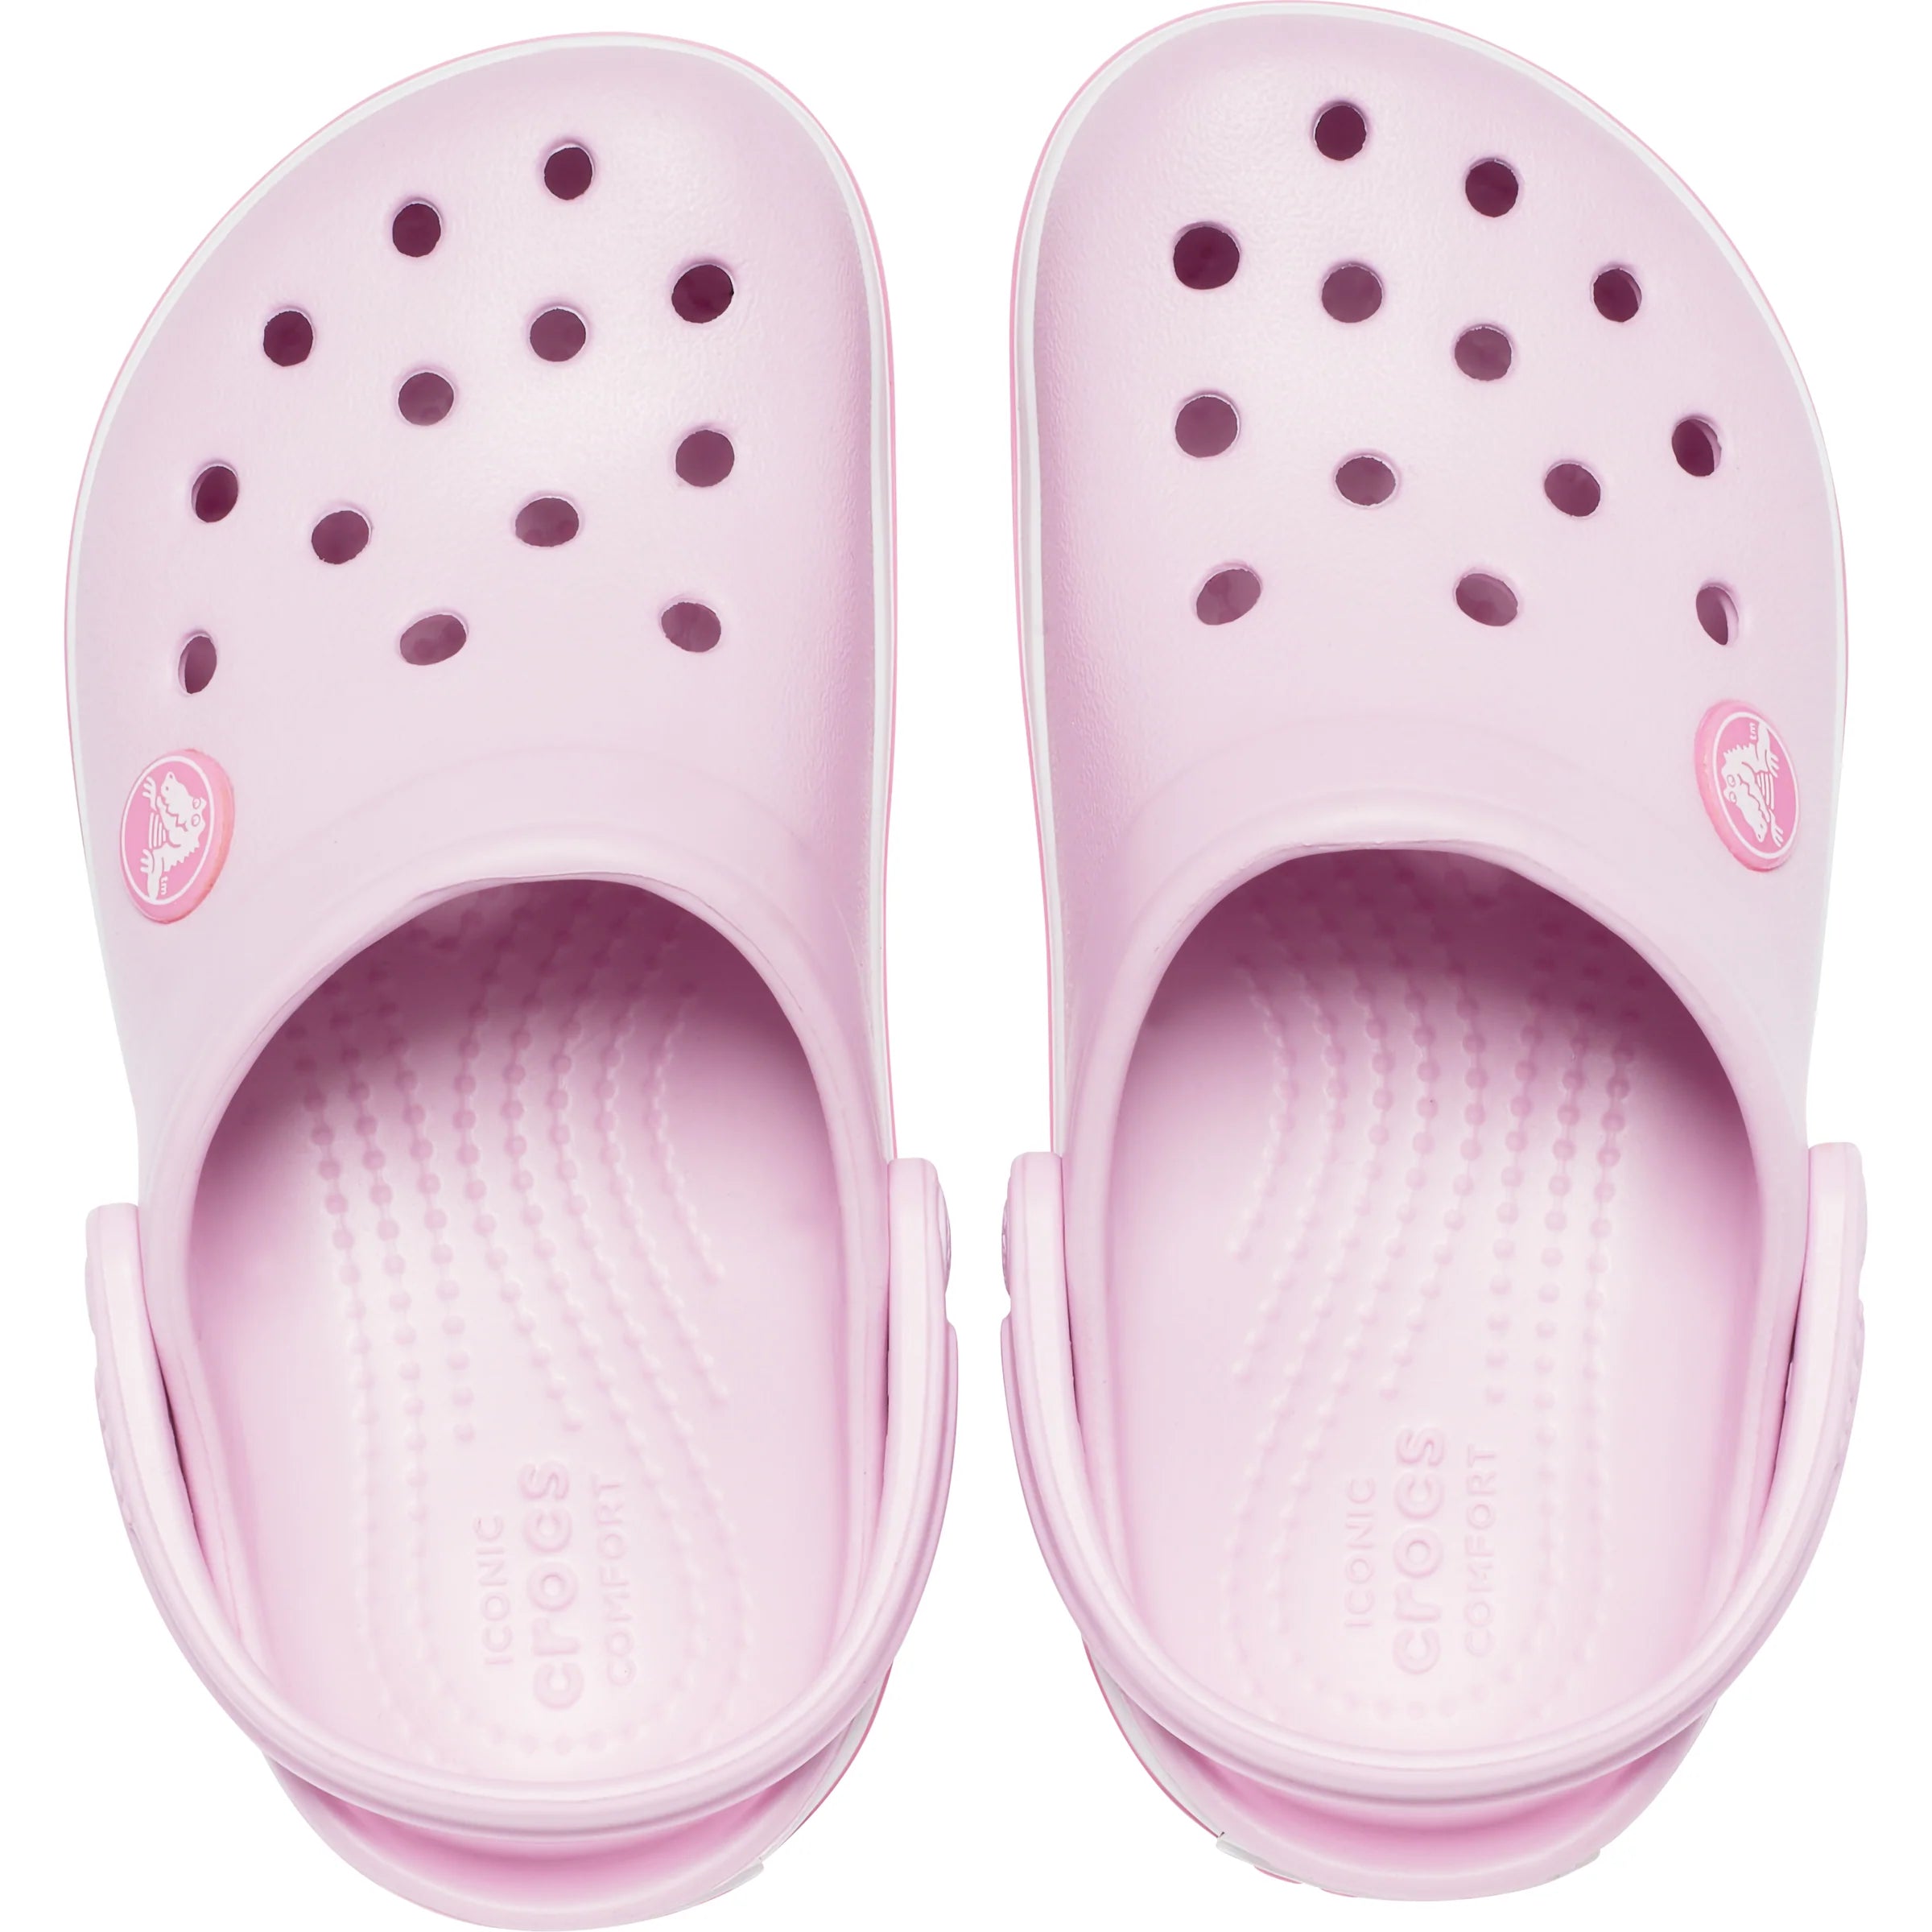 Crocband Clog Toddlers - shoe&me - Crocs - Clog - Clogs, Kids